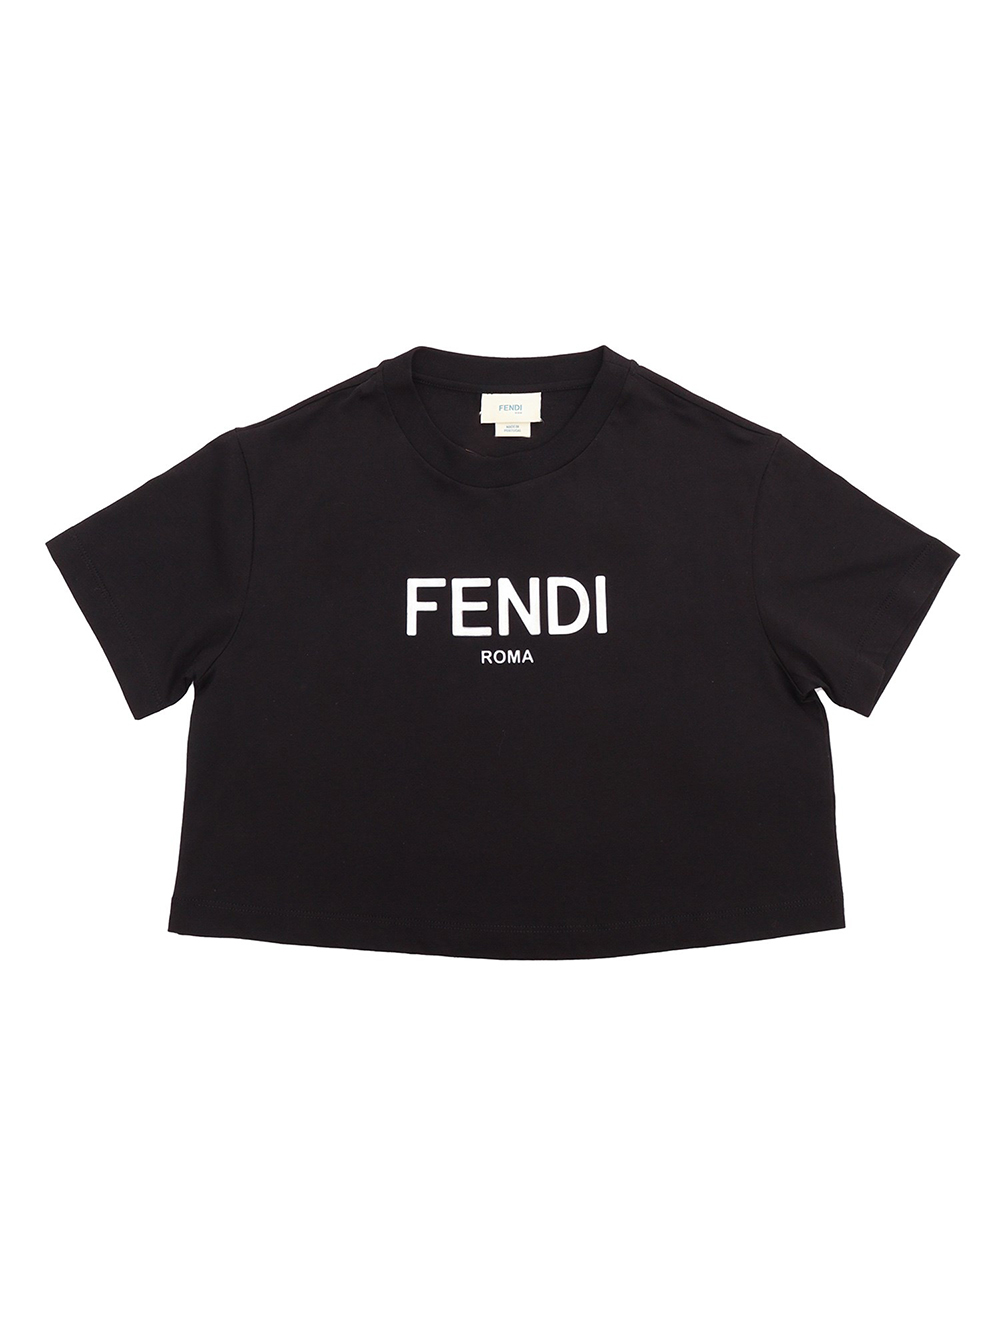 Fendi T-shirt  Roma In Black